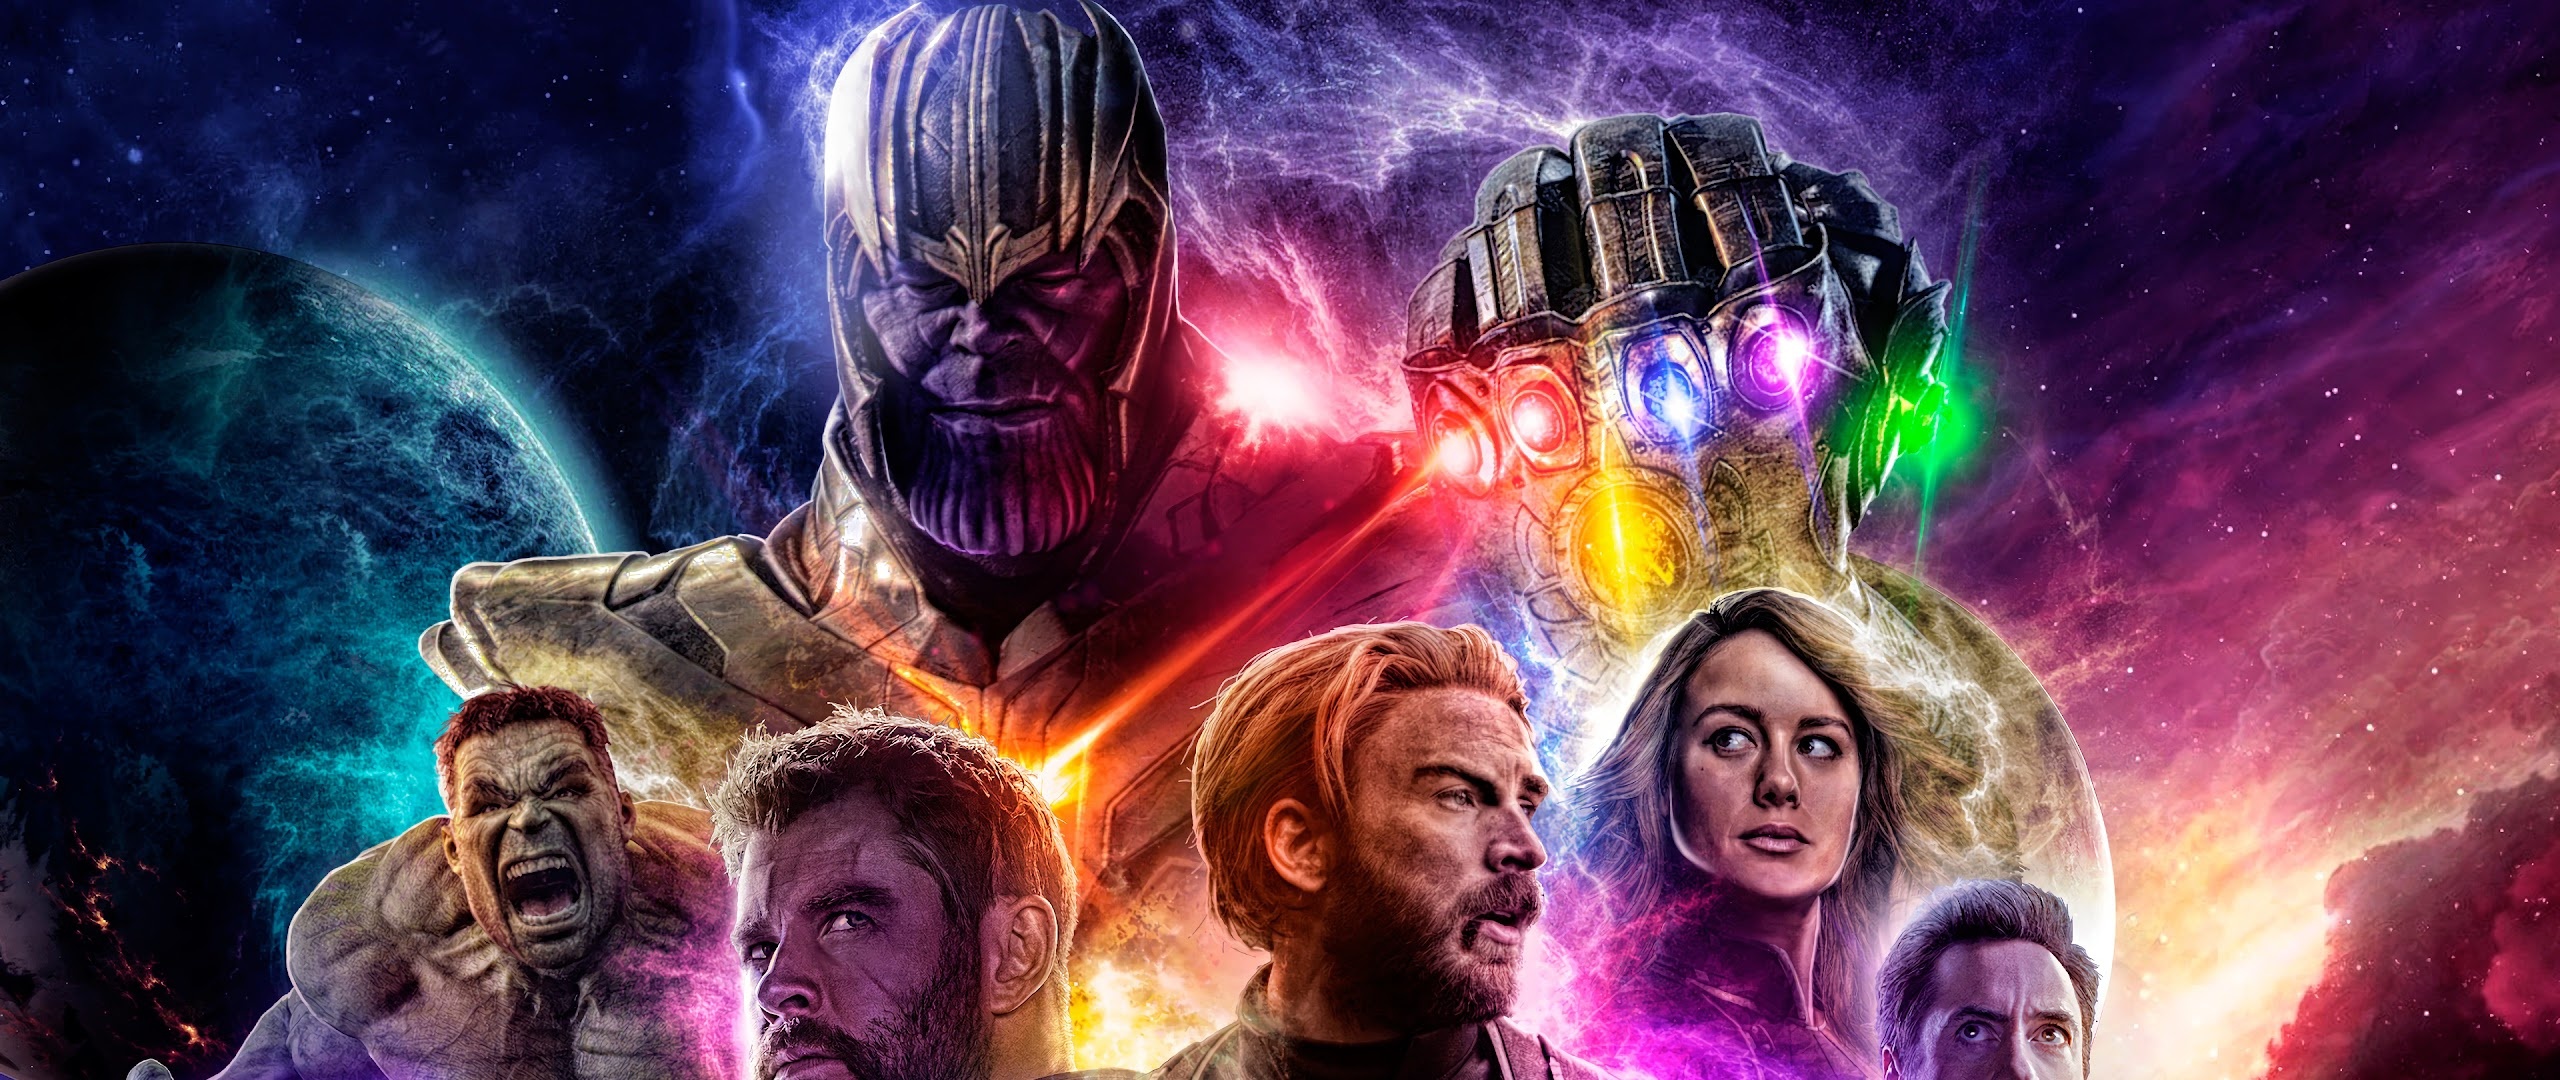 Thanos' power, Infinity Gauntlet, Avengers tribute, High-quality iPhone wallpaper, 2560x1080 Dual Screen Desktop